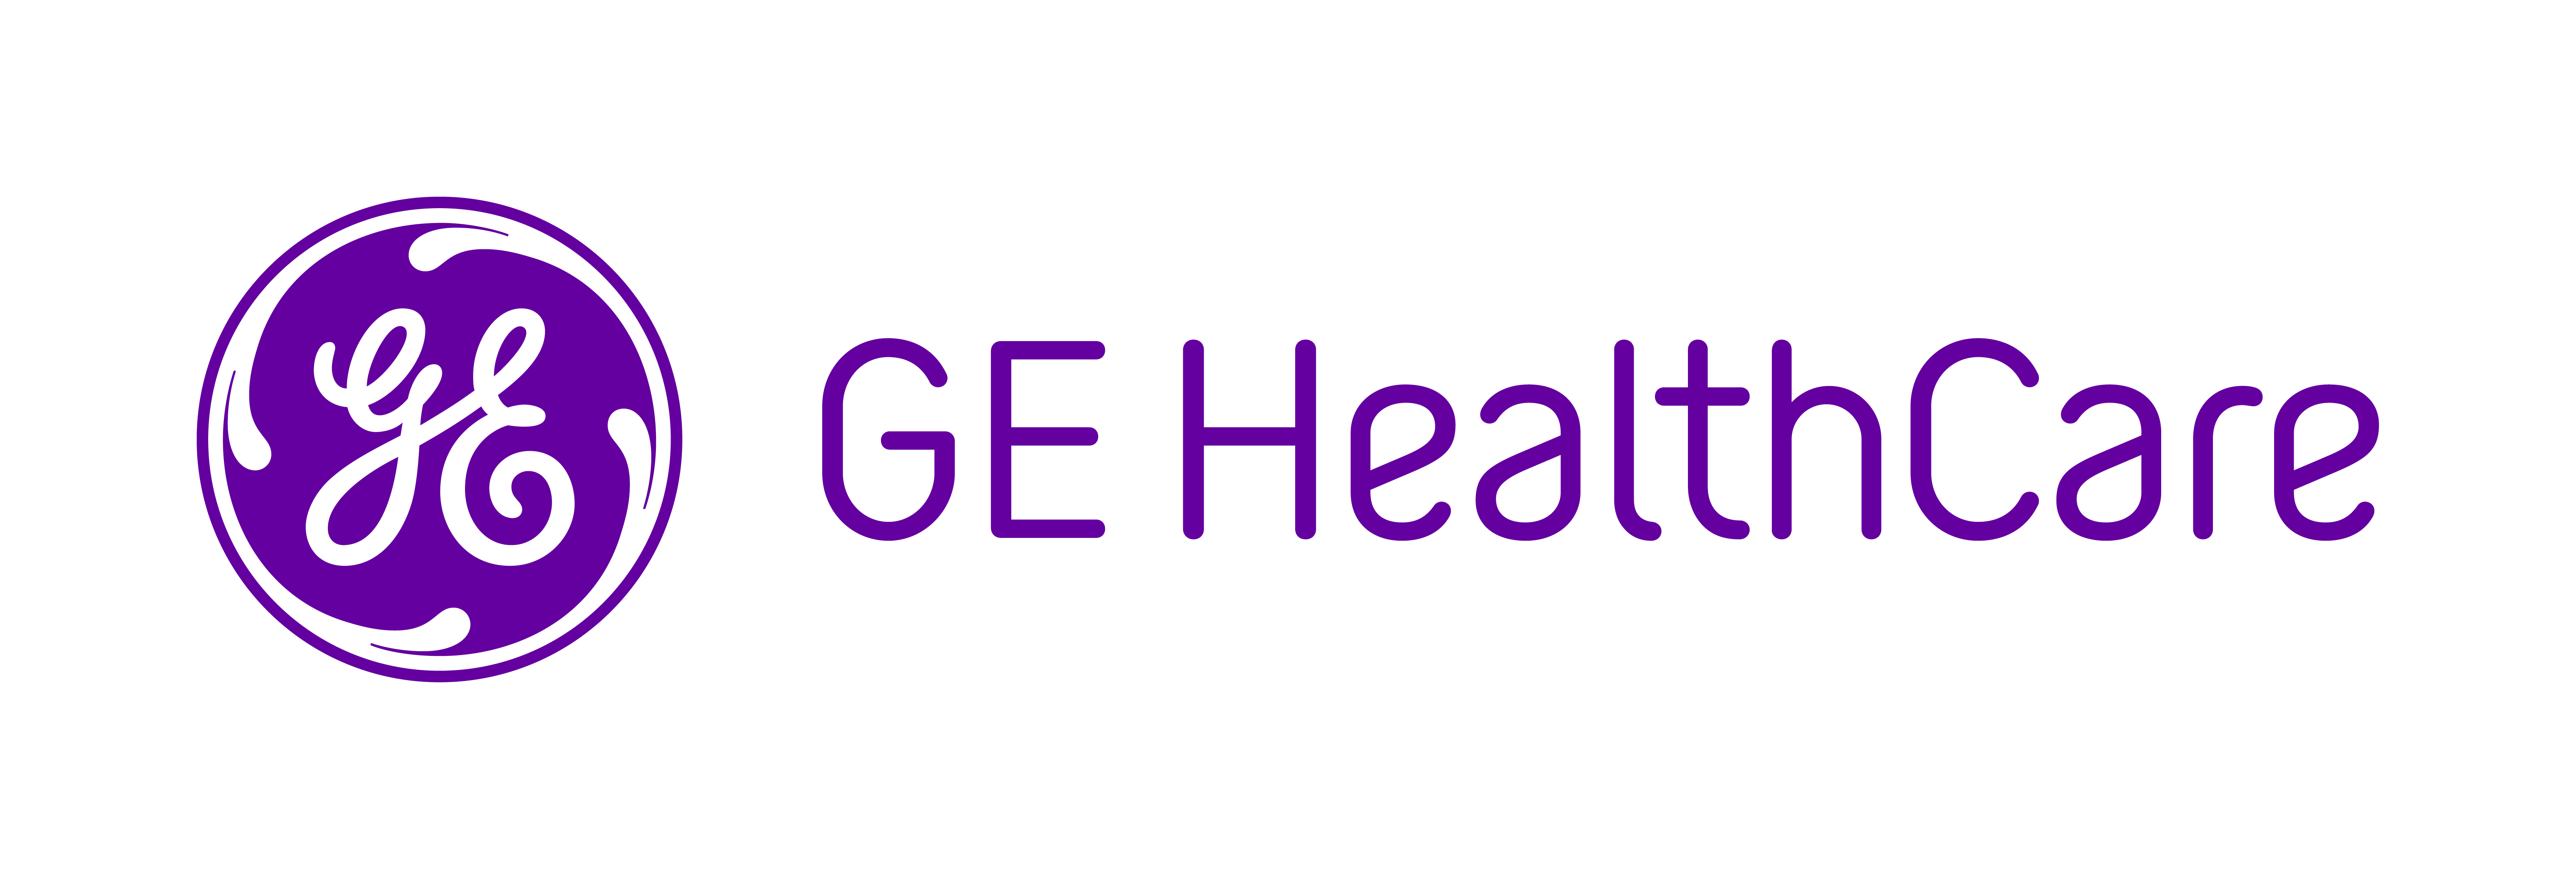 GE Healthcare purple